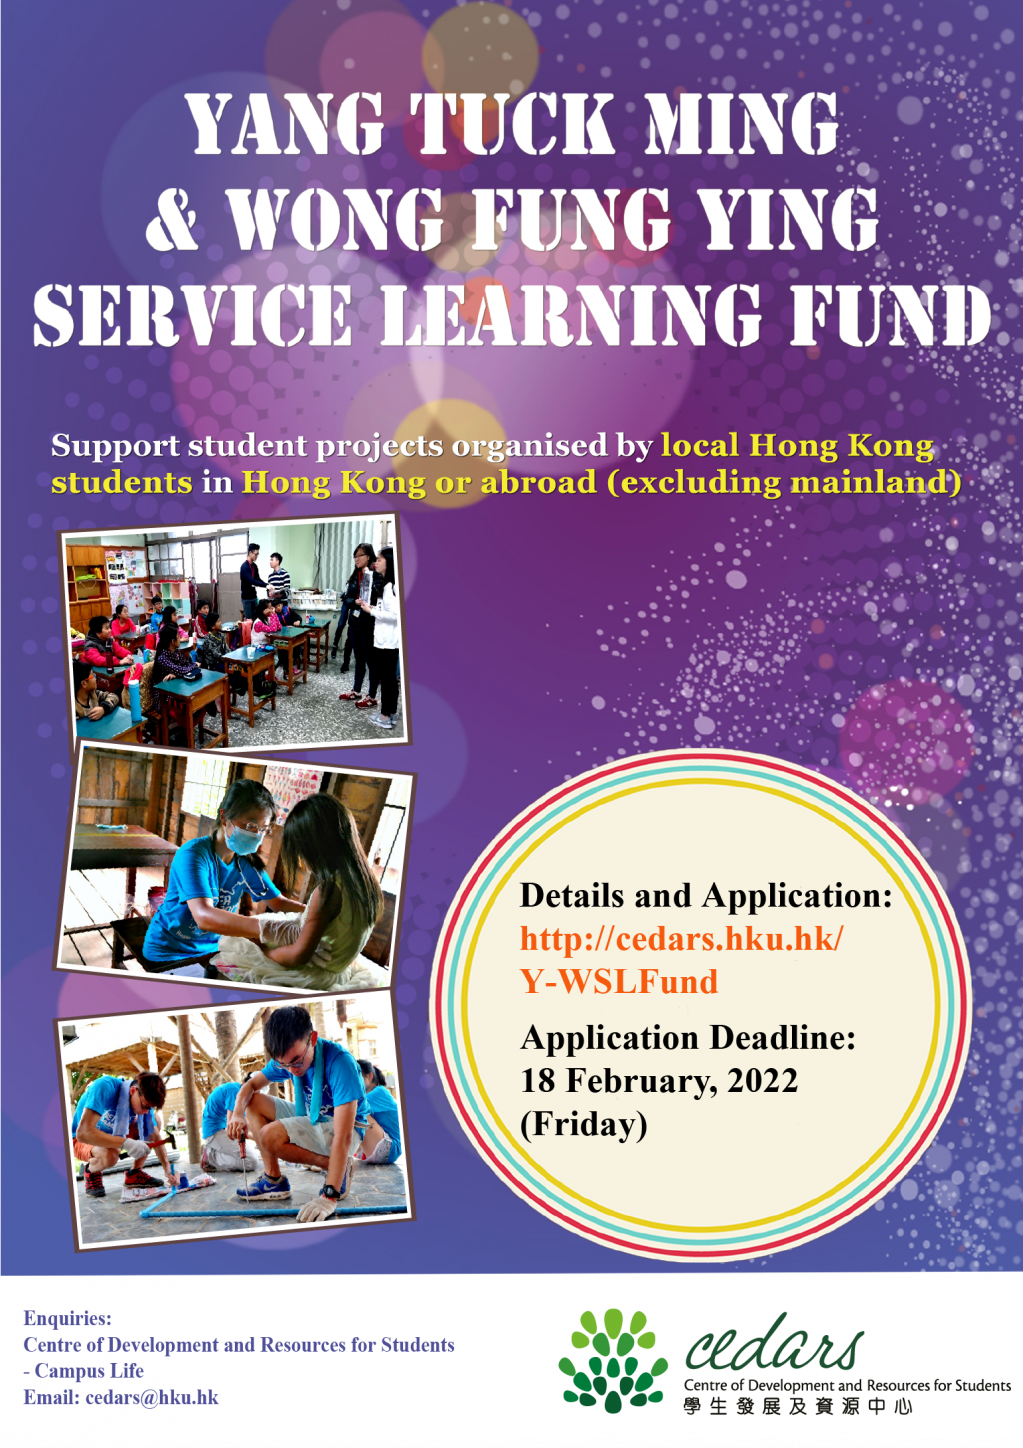 YTM& WFY Service Learning Fund